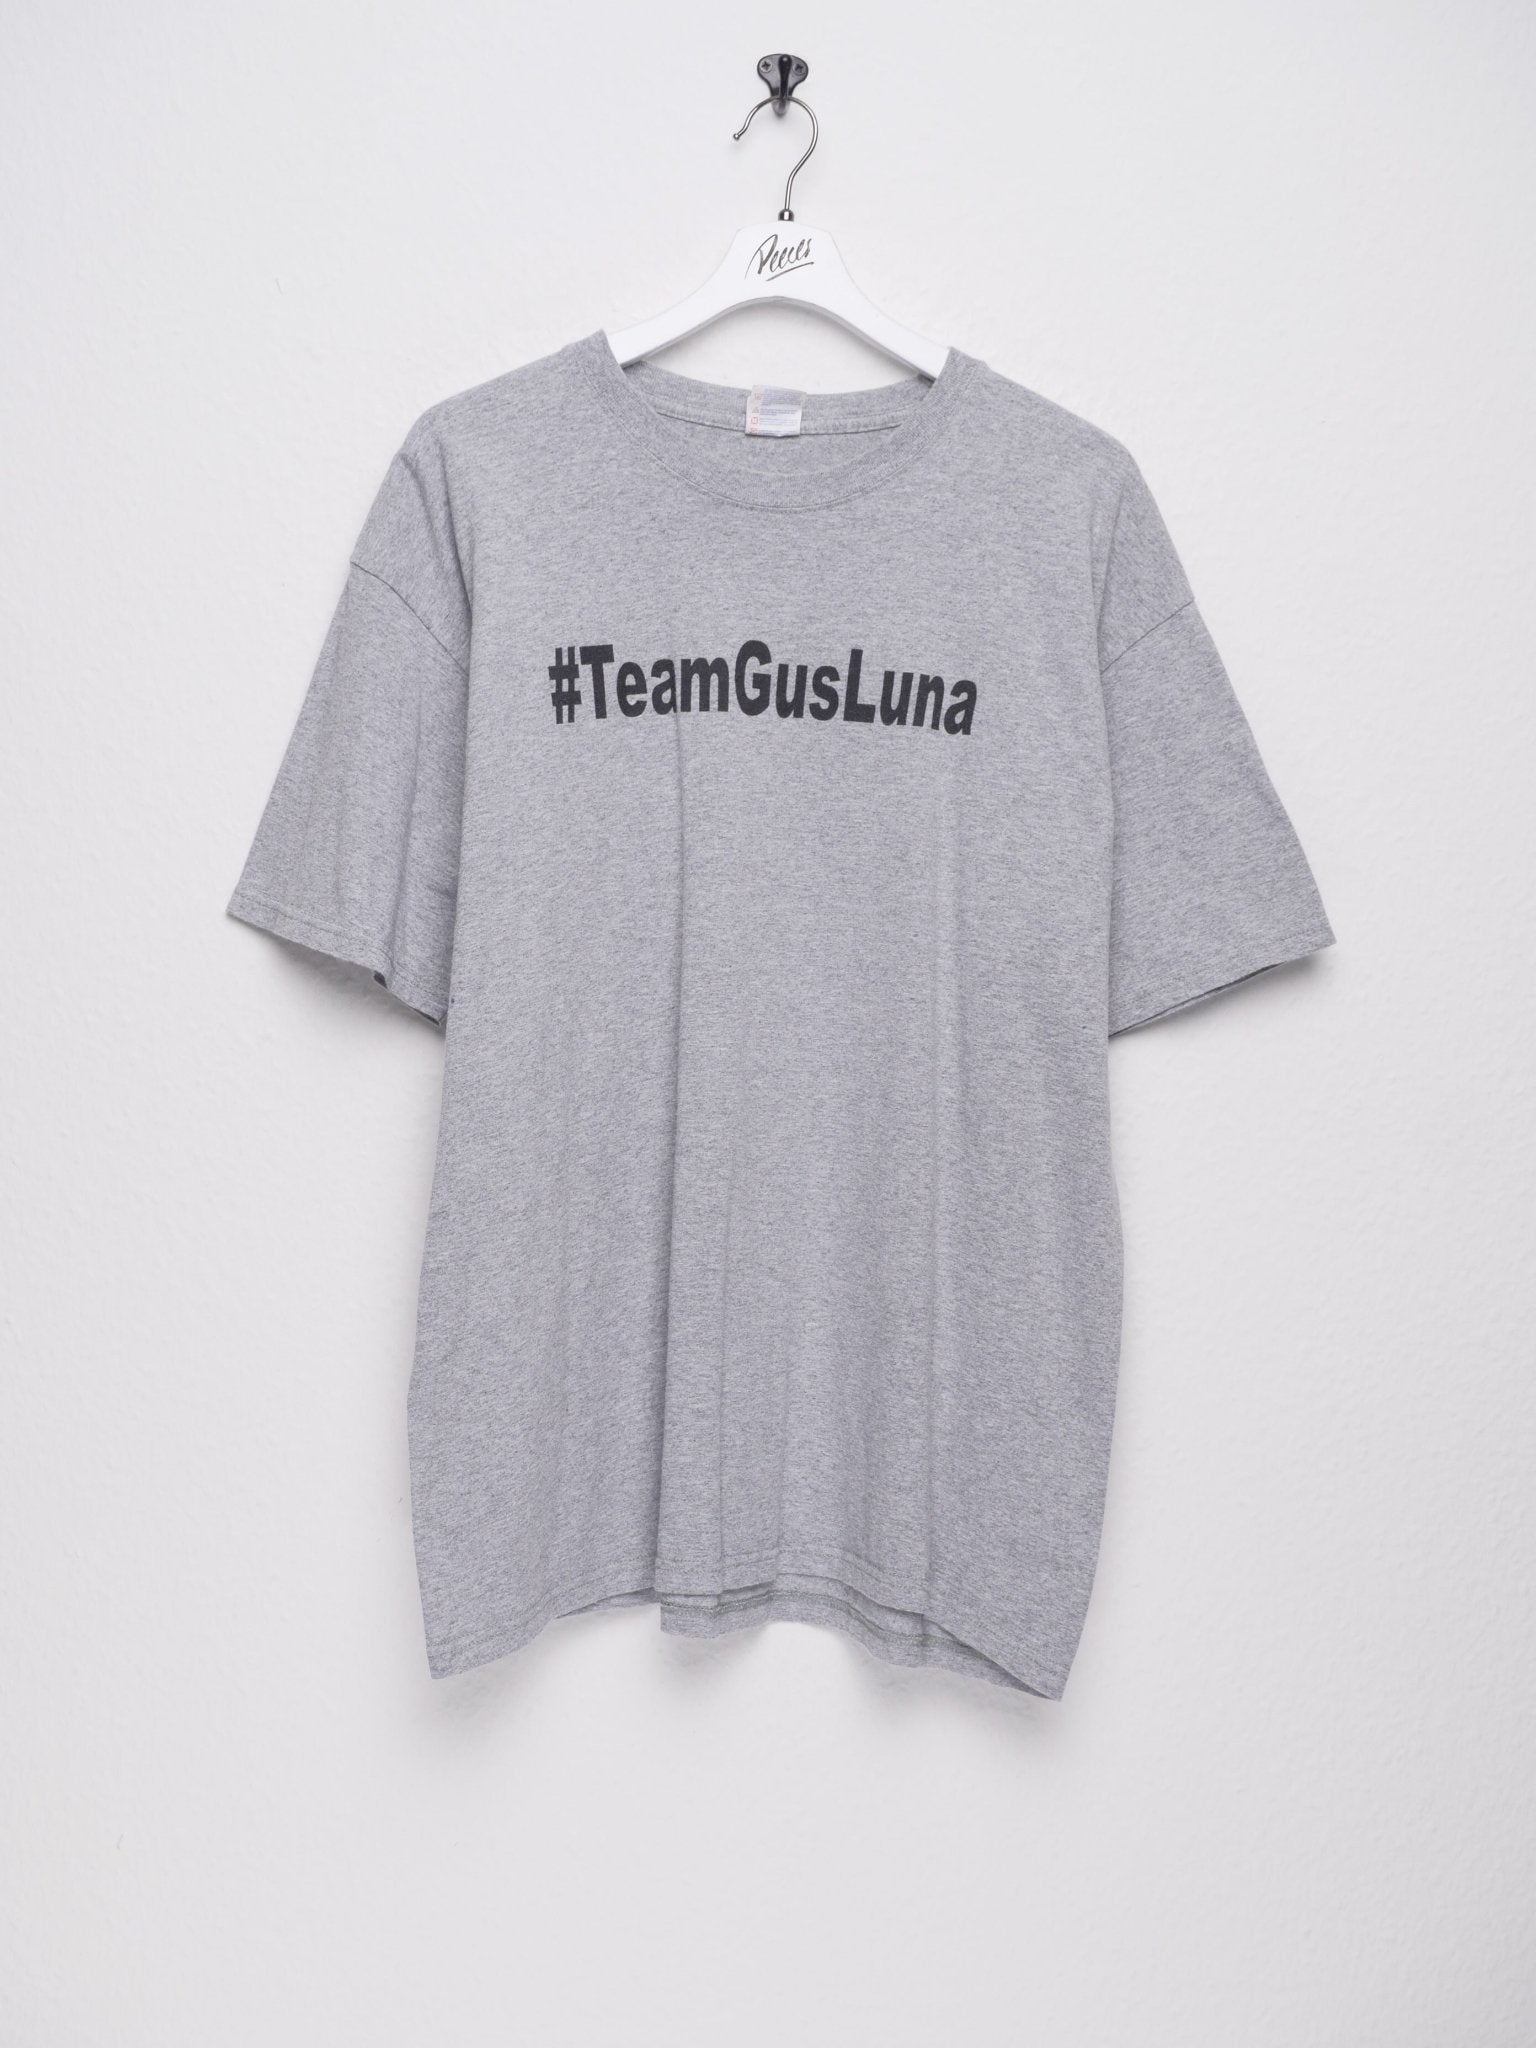 printed '#TeamGusLuna' Spellout grey Shirt - Peeces